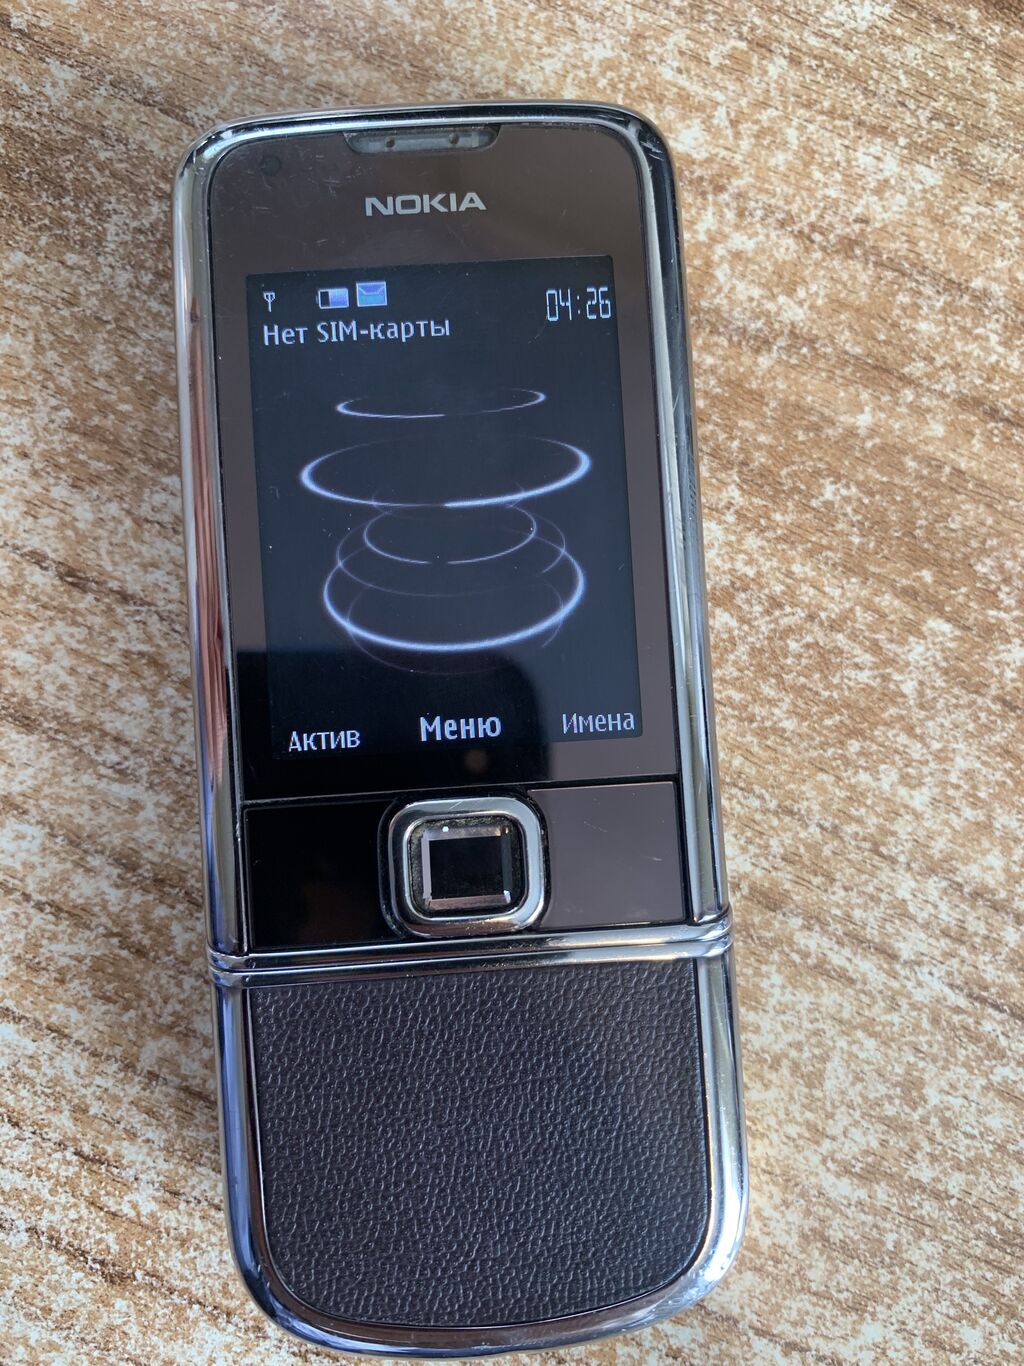 Nokia: Nokia sapphirela veziyyetdedir — 1